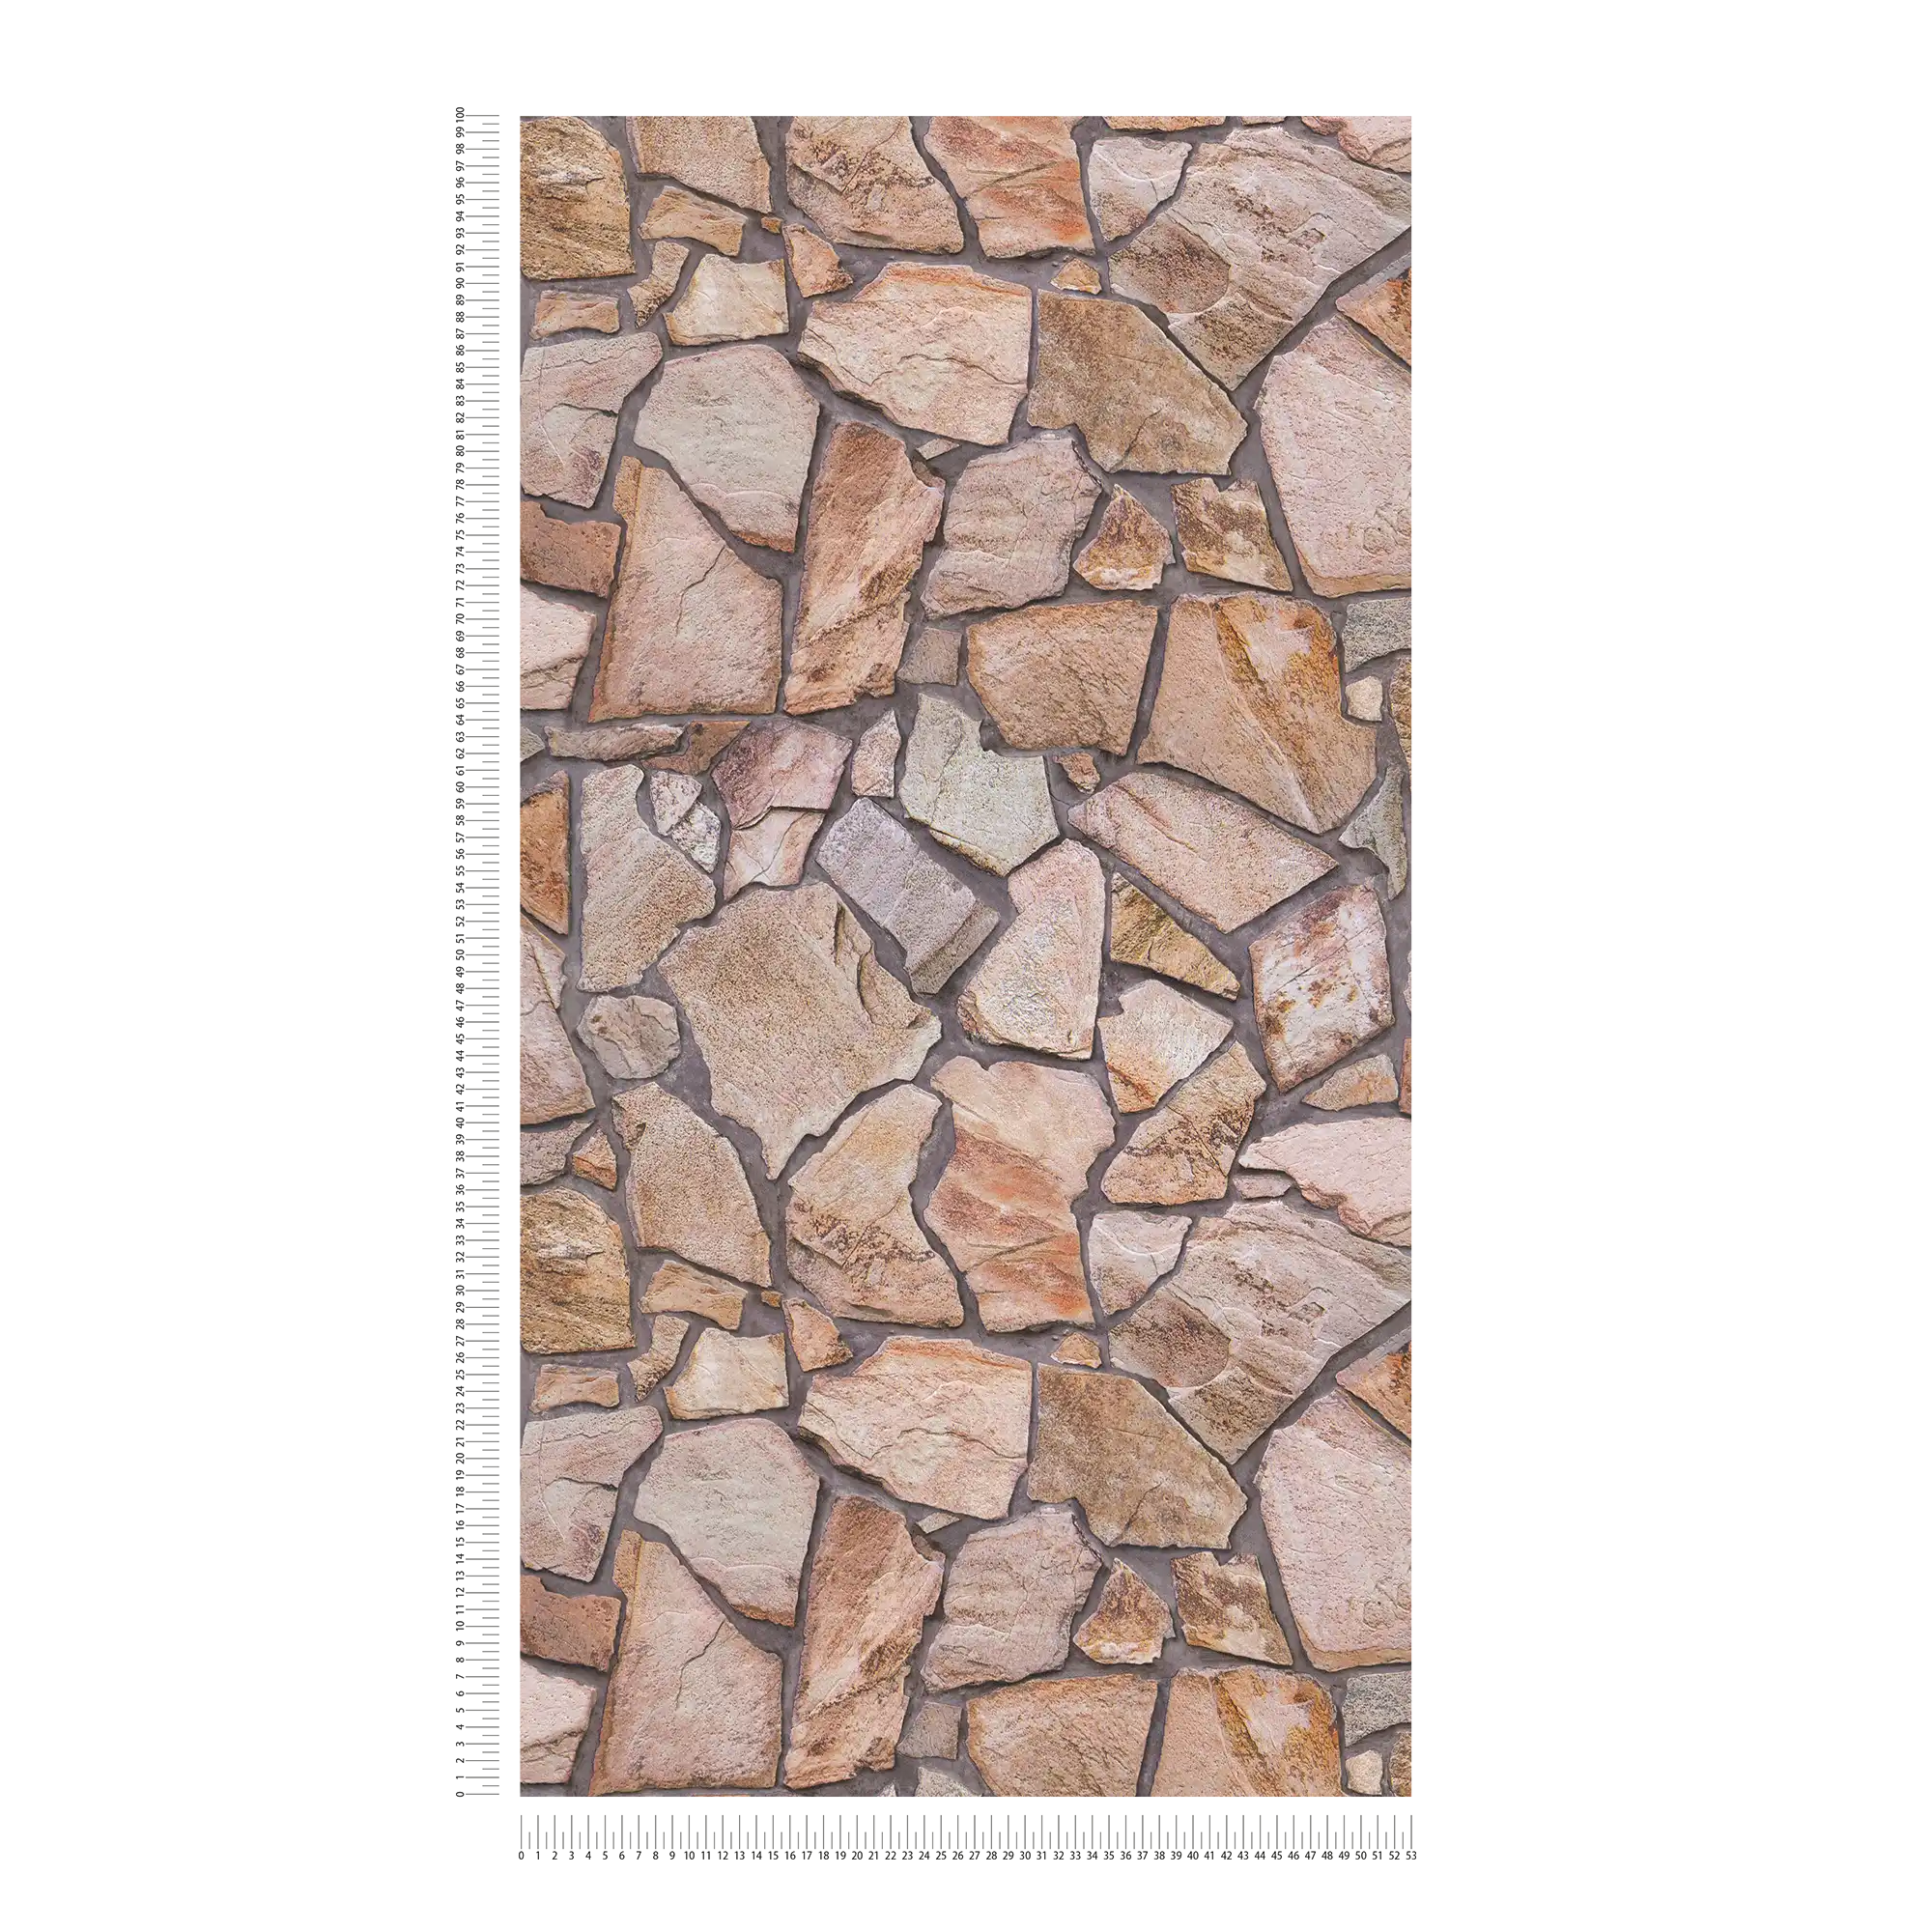             Carta da parati 3d pietra naturale dettagliata e rustica - marrone, beige, grigio
        